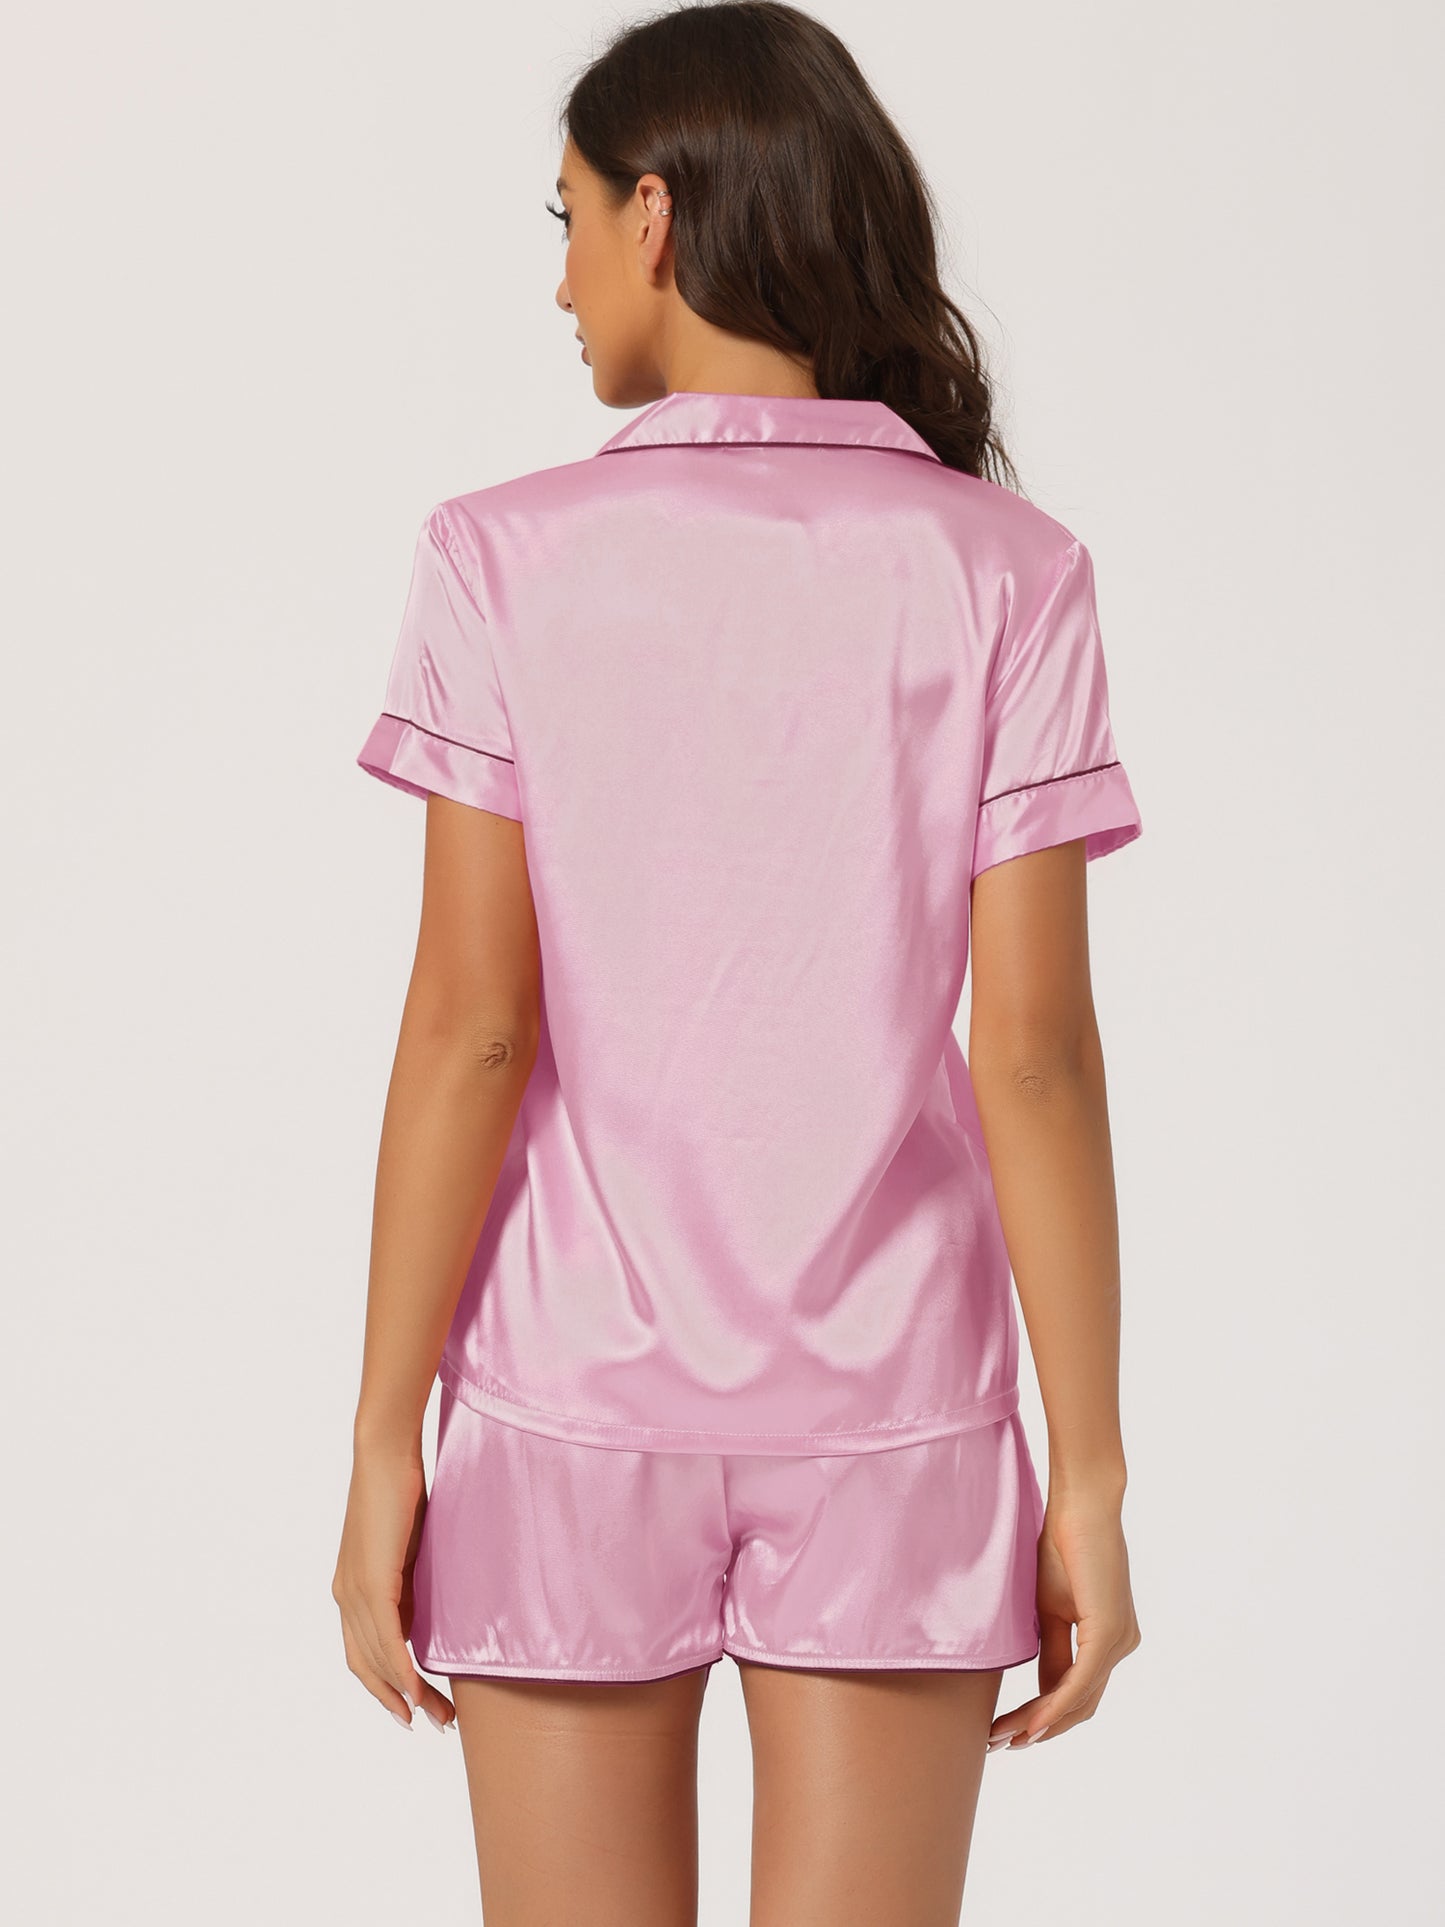 cheibear Pajama Loungewear Short Sleeves Button Down Satin Pj Sets Light Pink